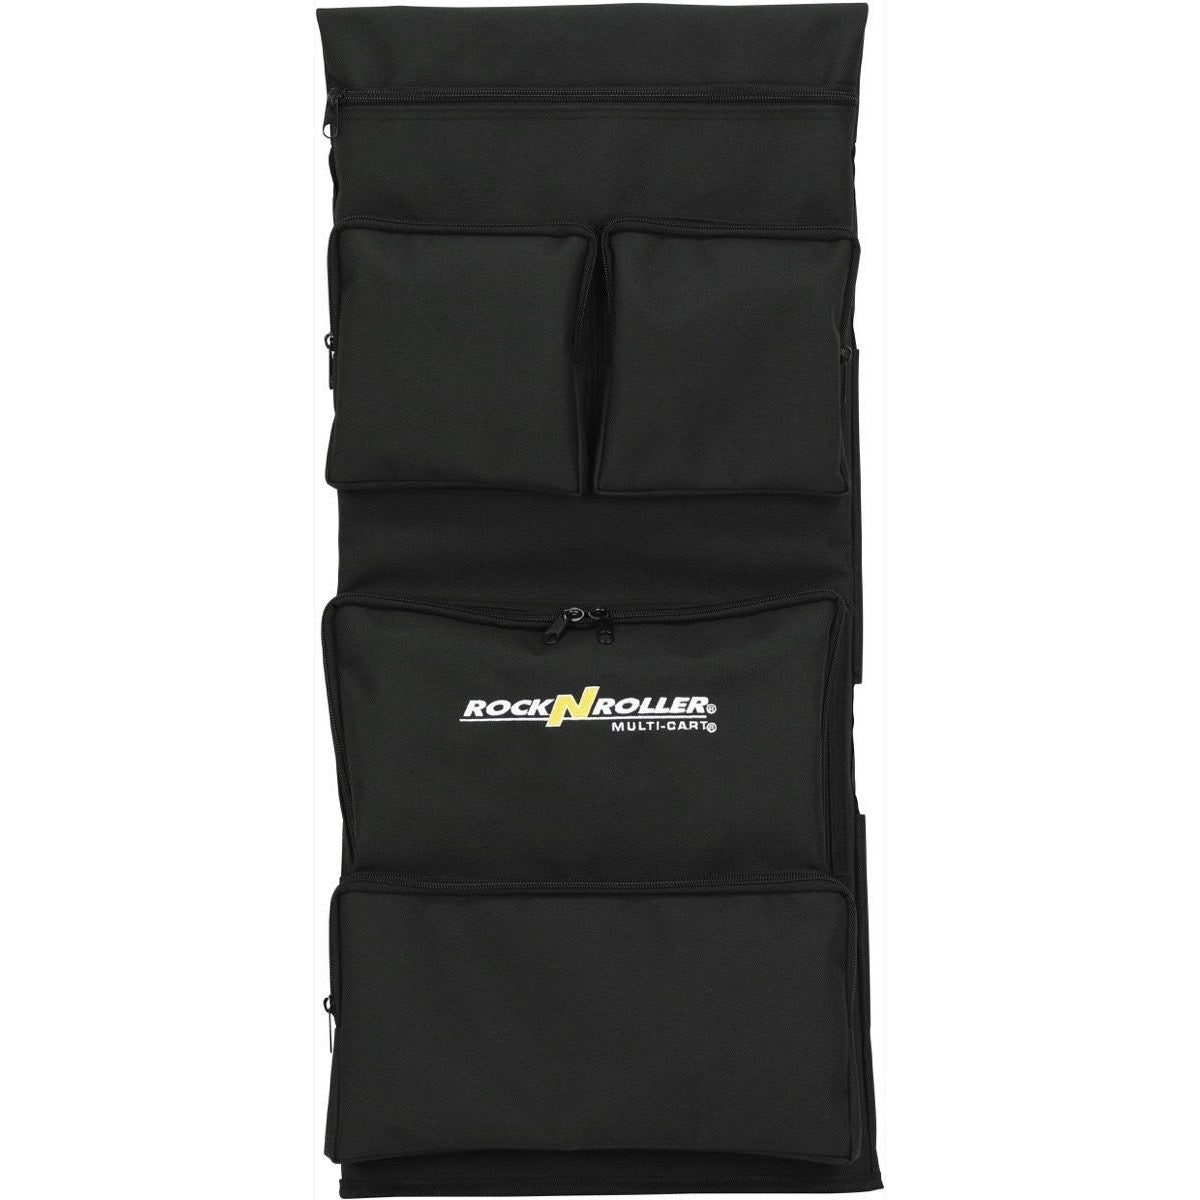 RocknRoller Tool/Accessory Bag, RSA-TAB6, Small